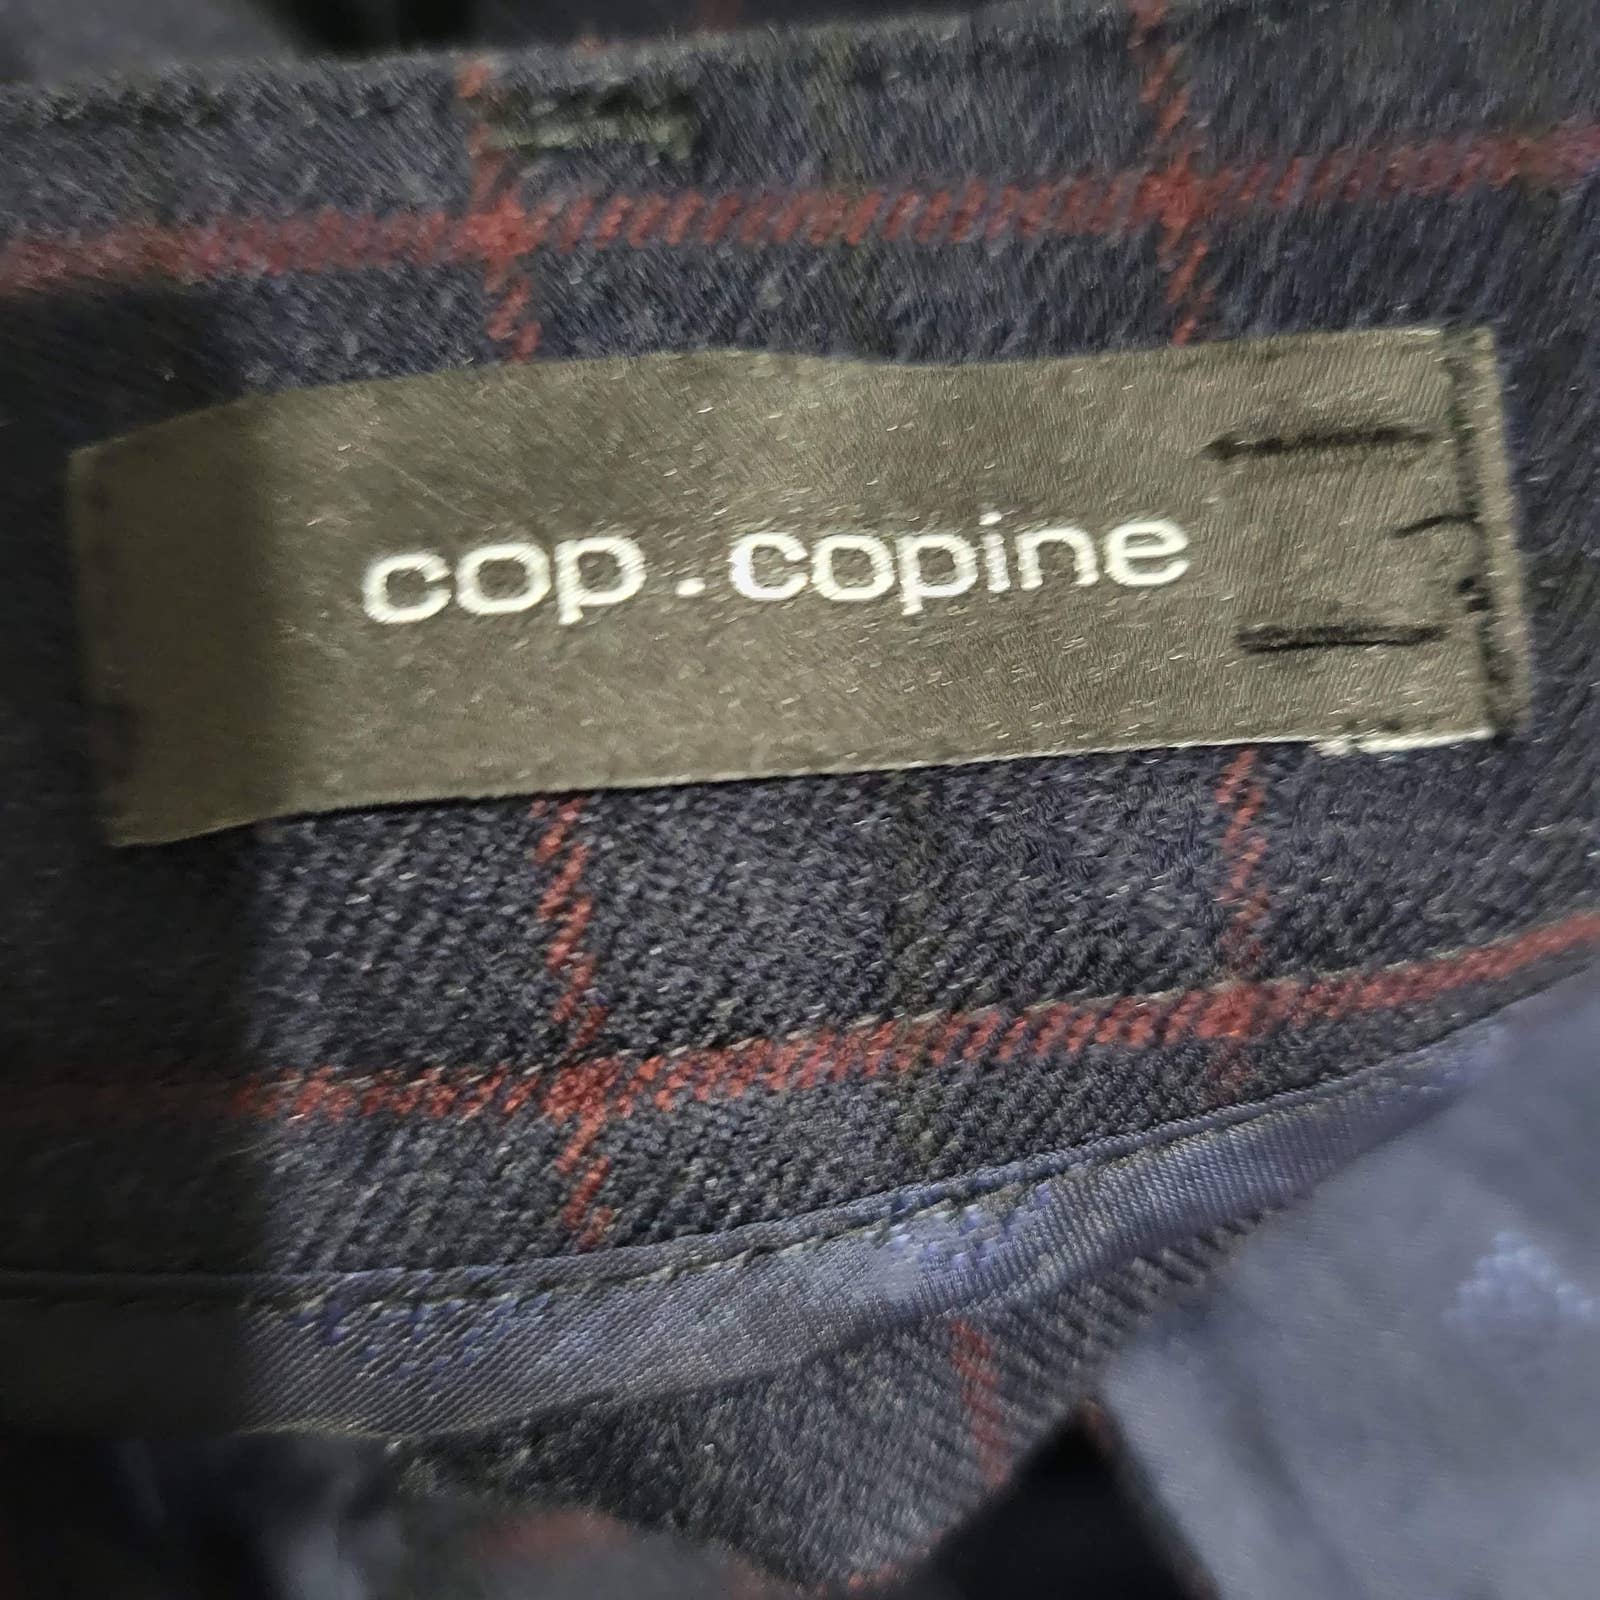 Cop Copine Ouaf Cropped Trouser Pants Blue Check Plaid Windowpane Cuffed Wide Leg Size 40 10